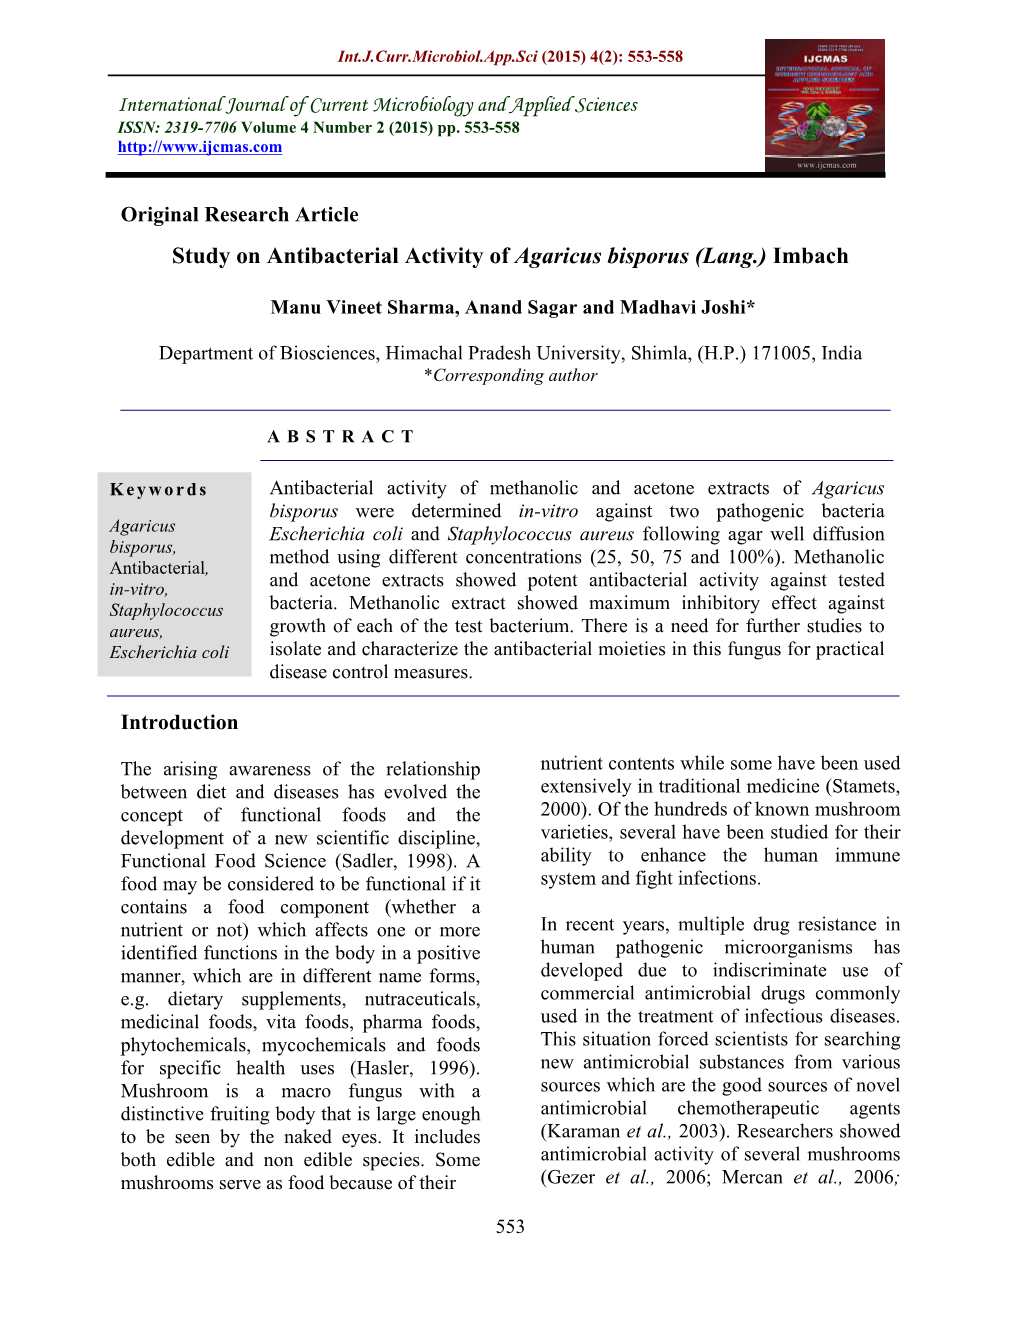 Study on Antibacterial Activity of Agaricus Bisporus (Lang.) Imbach